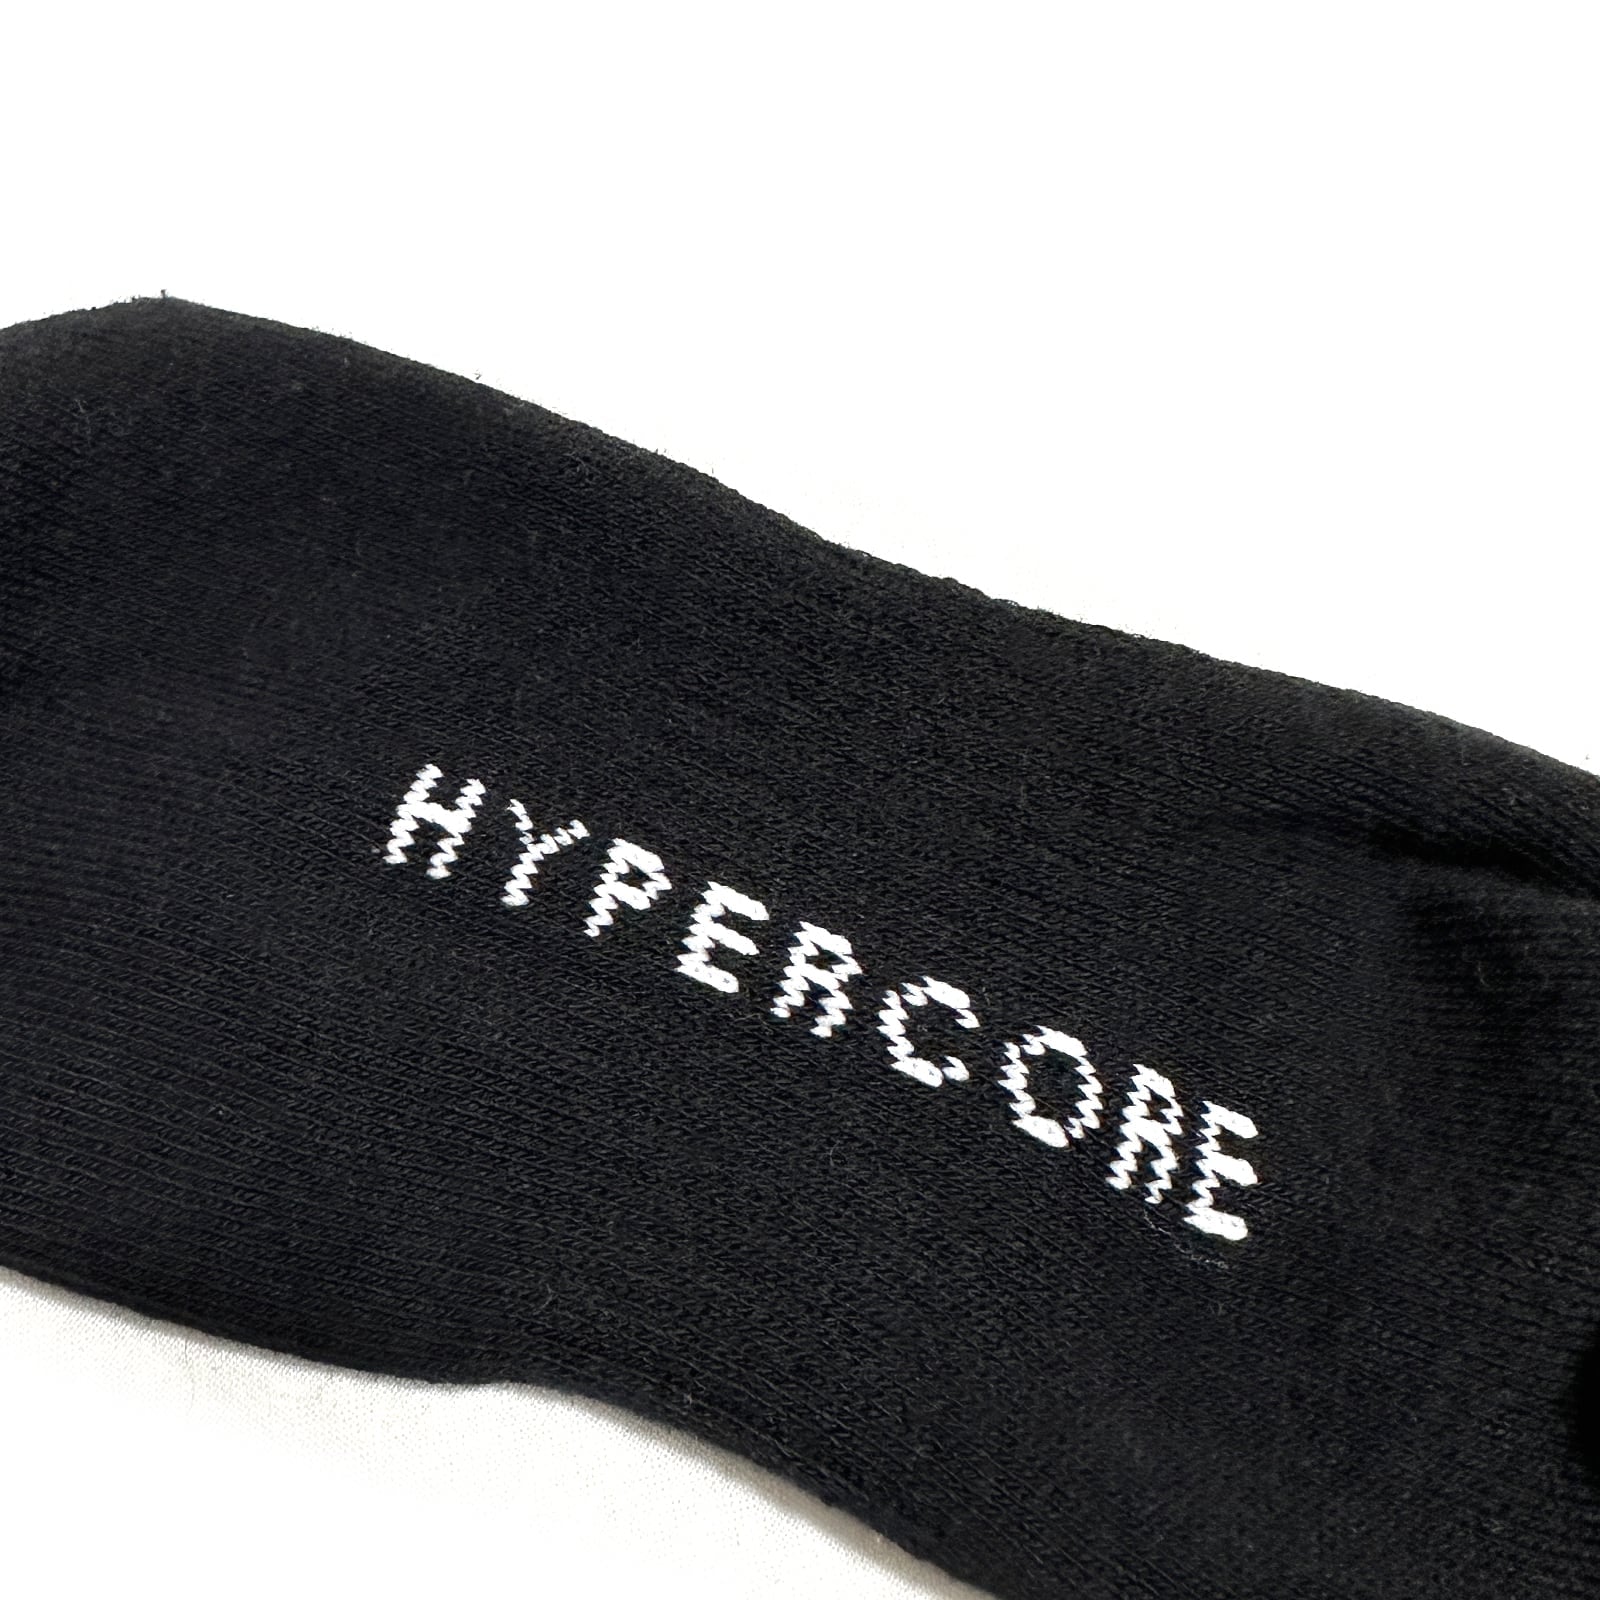 Hypercore "Bones" Positive Vibes Only socks